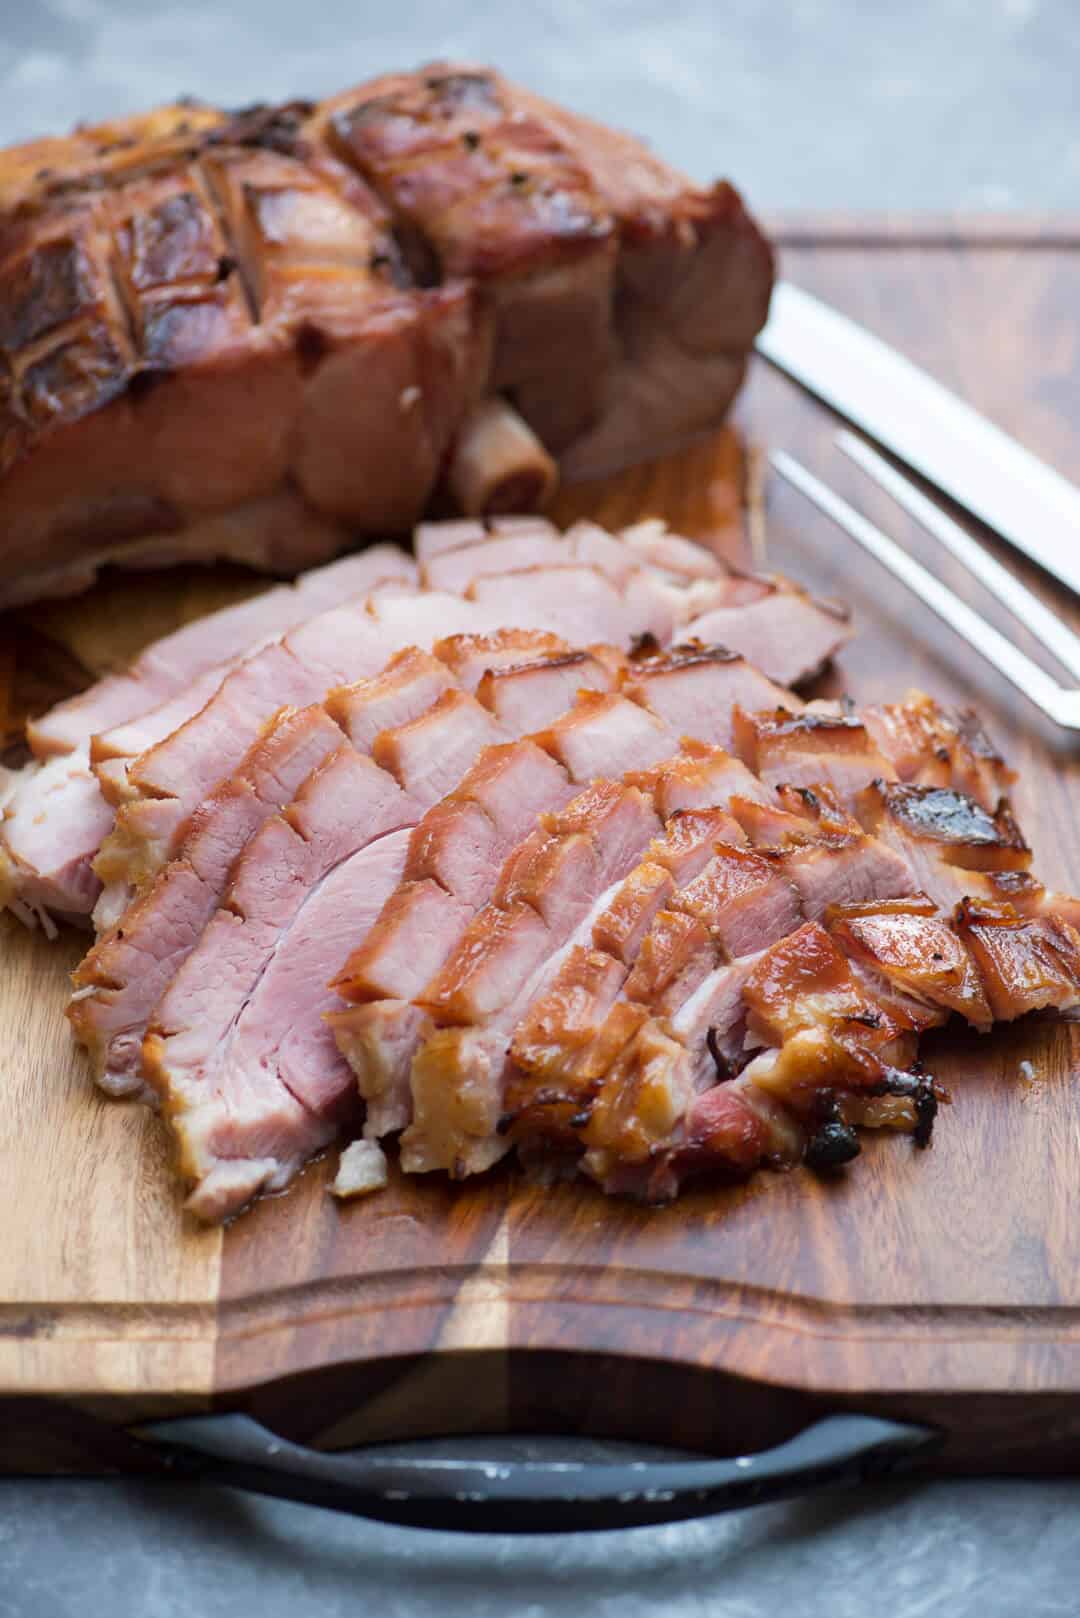 The sliced ham on a cutting board.